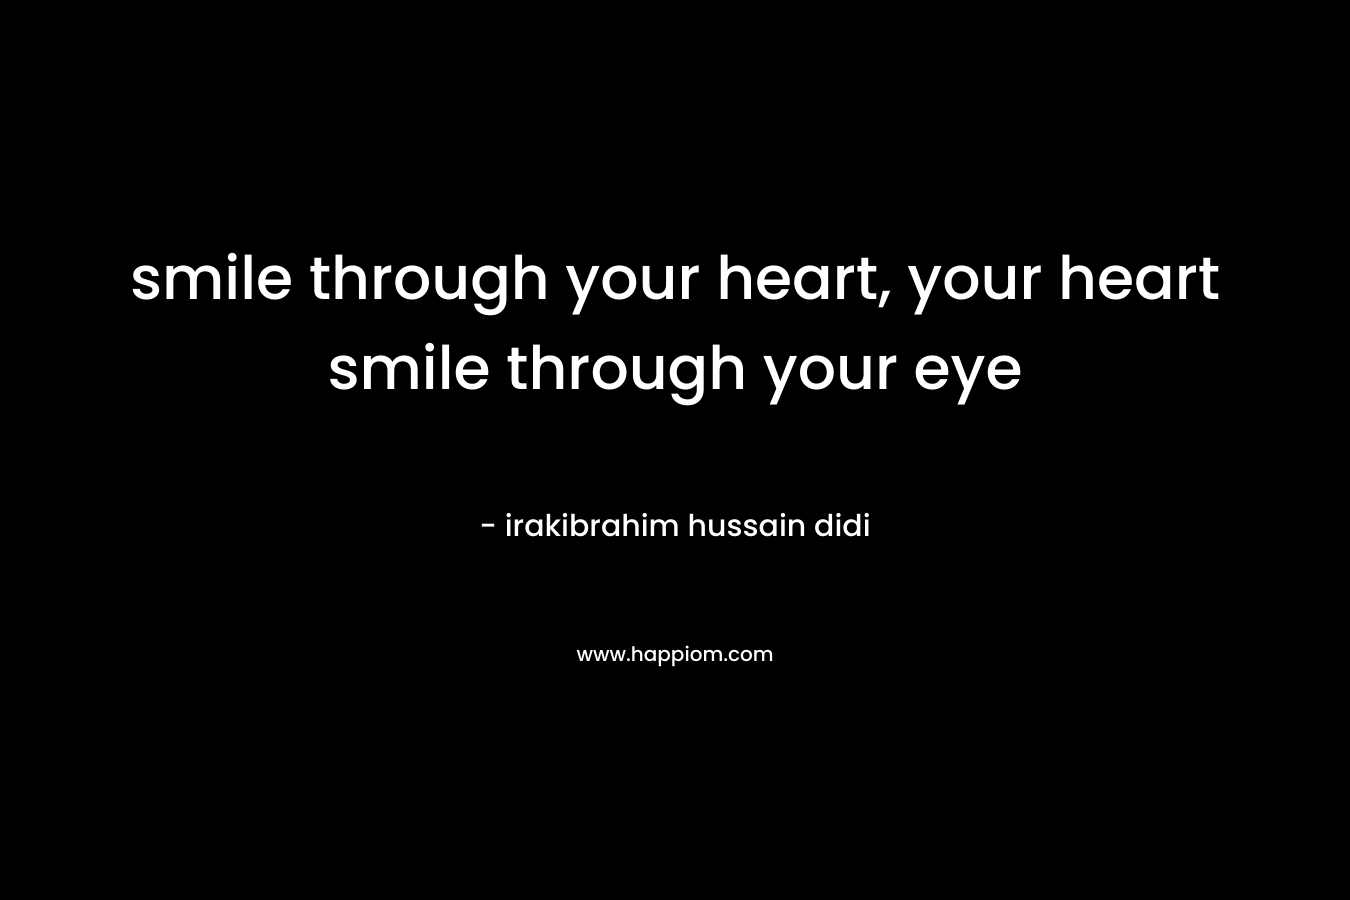 smile through your heart, your heart smile through your eye